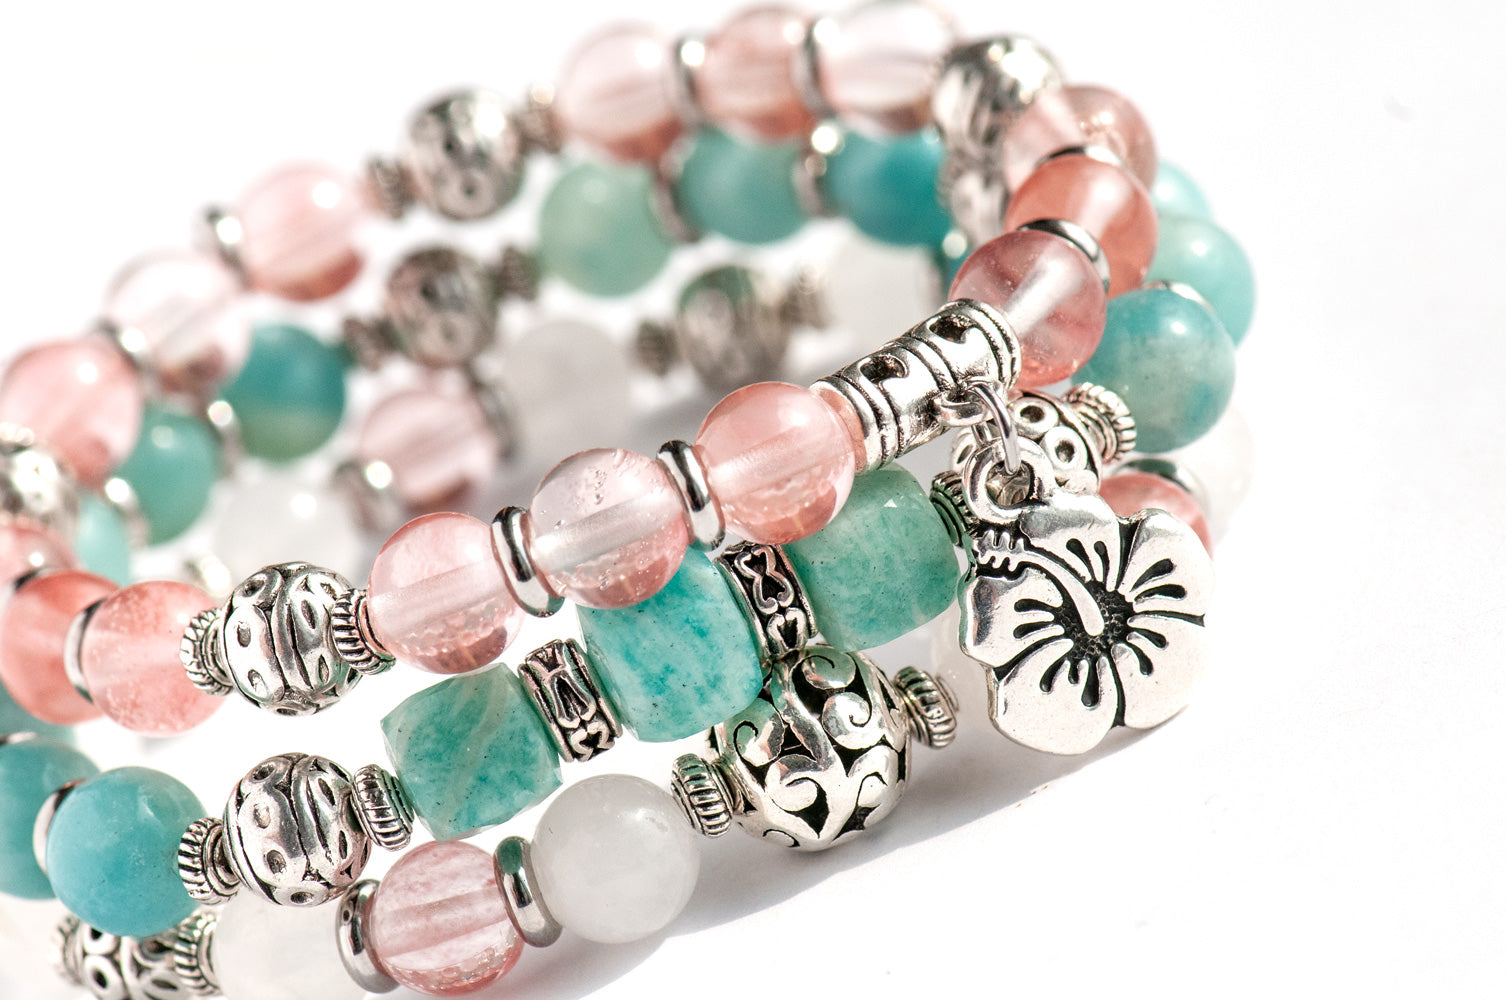 natural stone bracelet stack handmade in Canada with amazonite, cherry quartz and jade beads